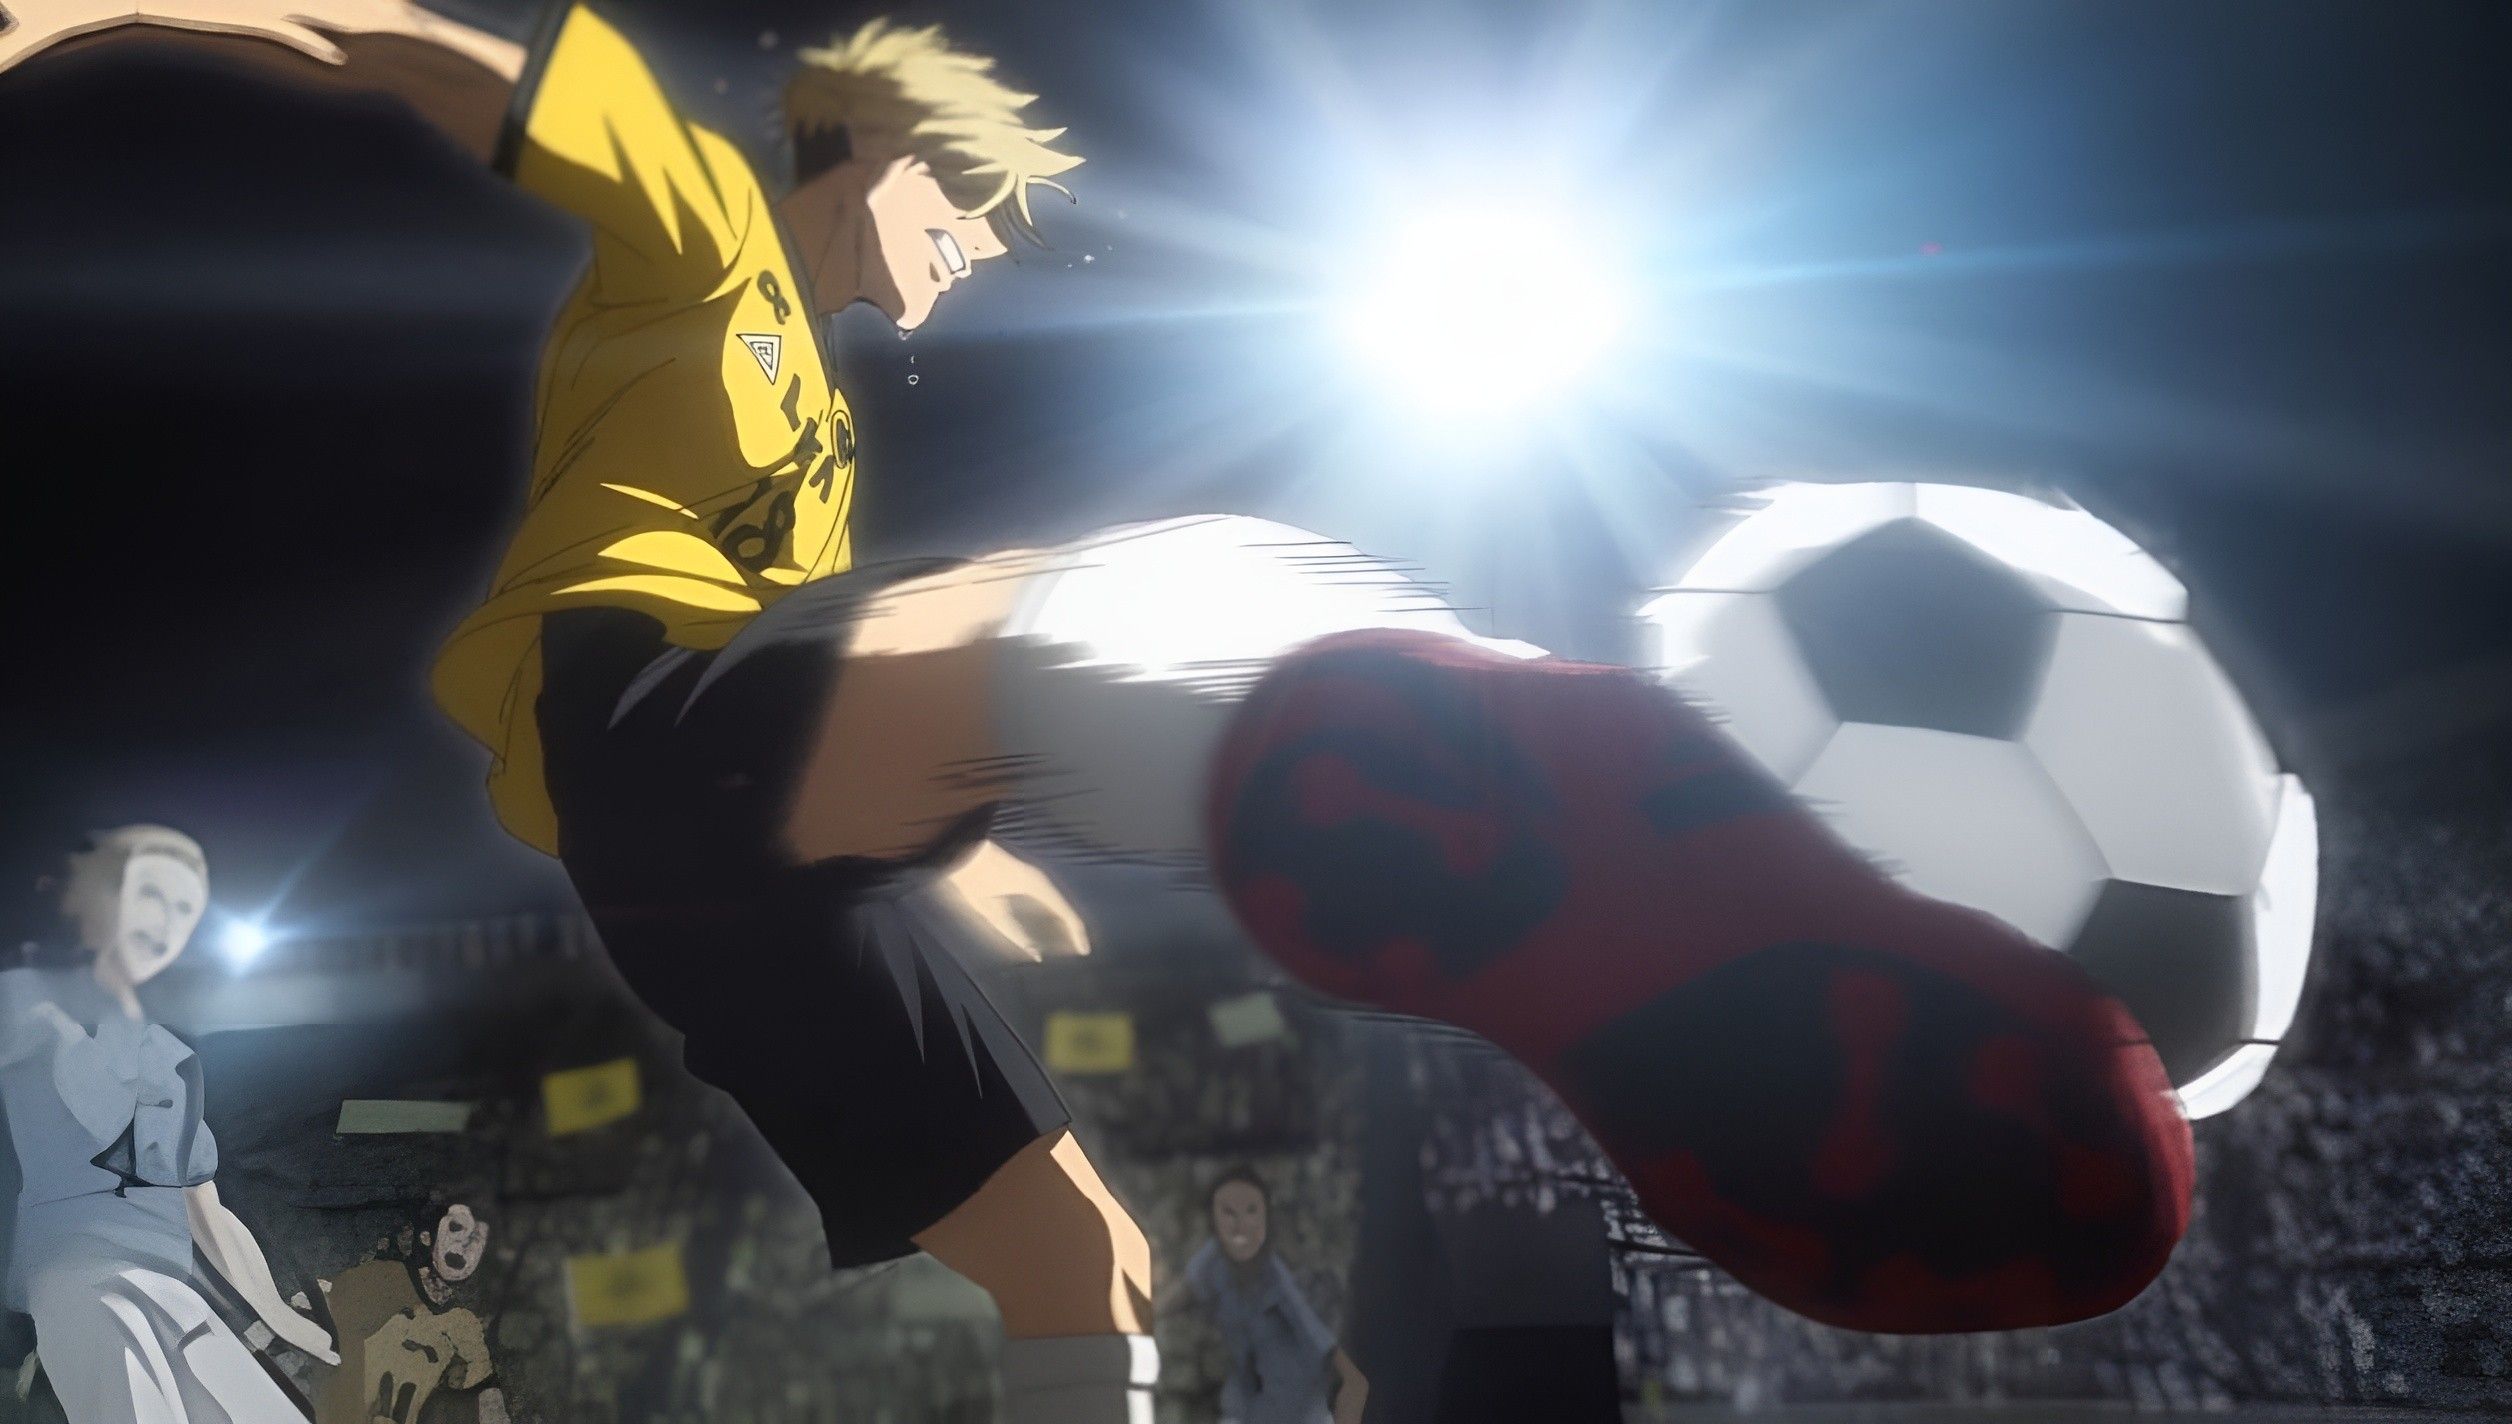 Blue Lock vs. Aoashi: Which soccer anime reigns supreme